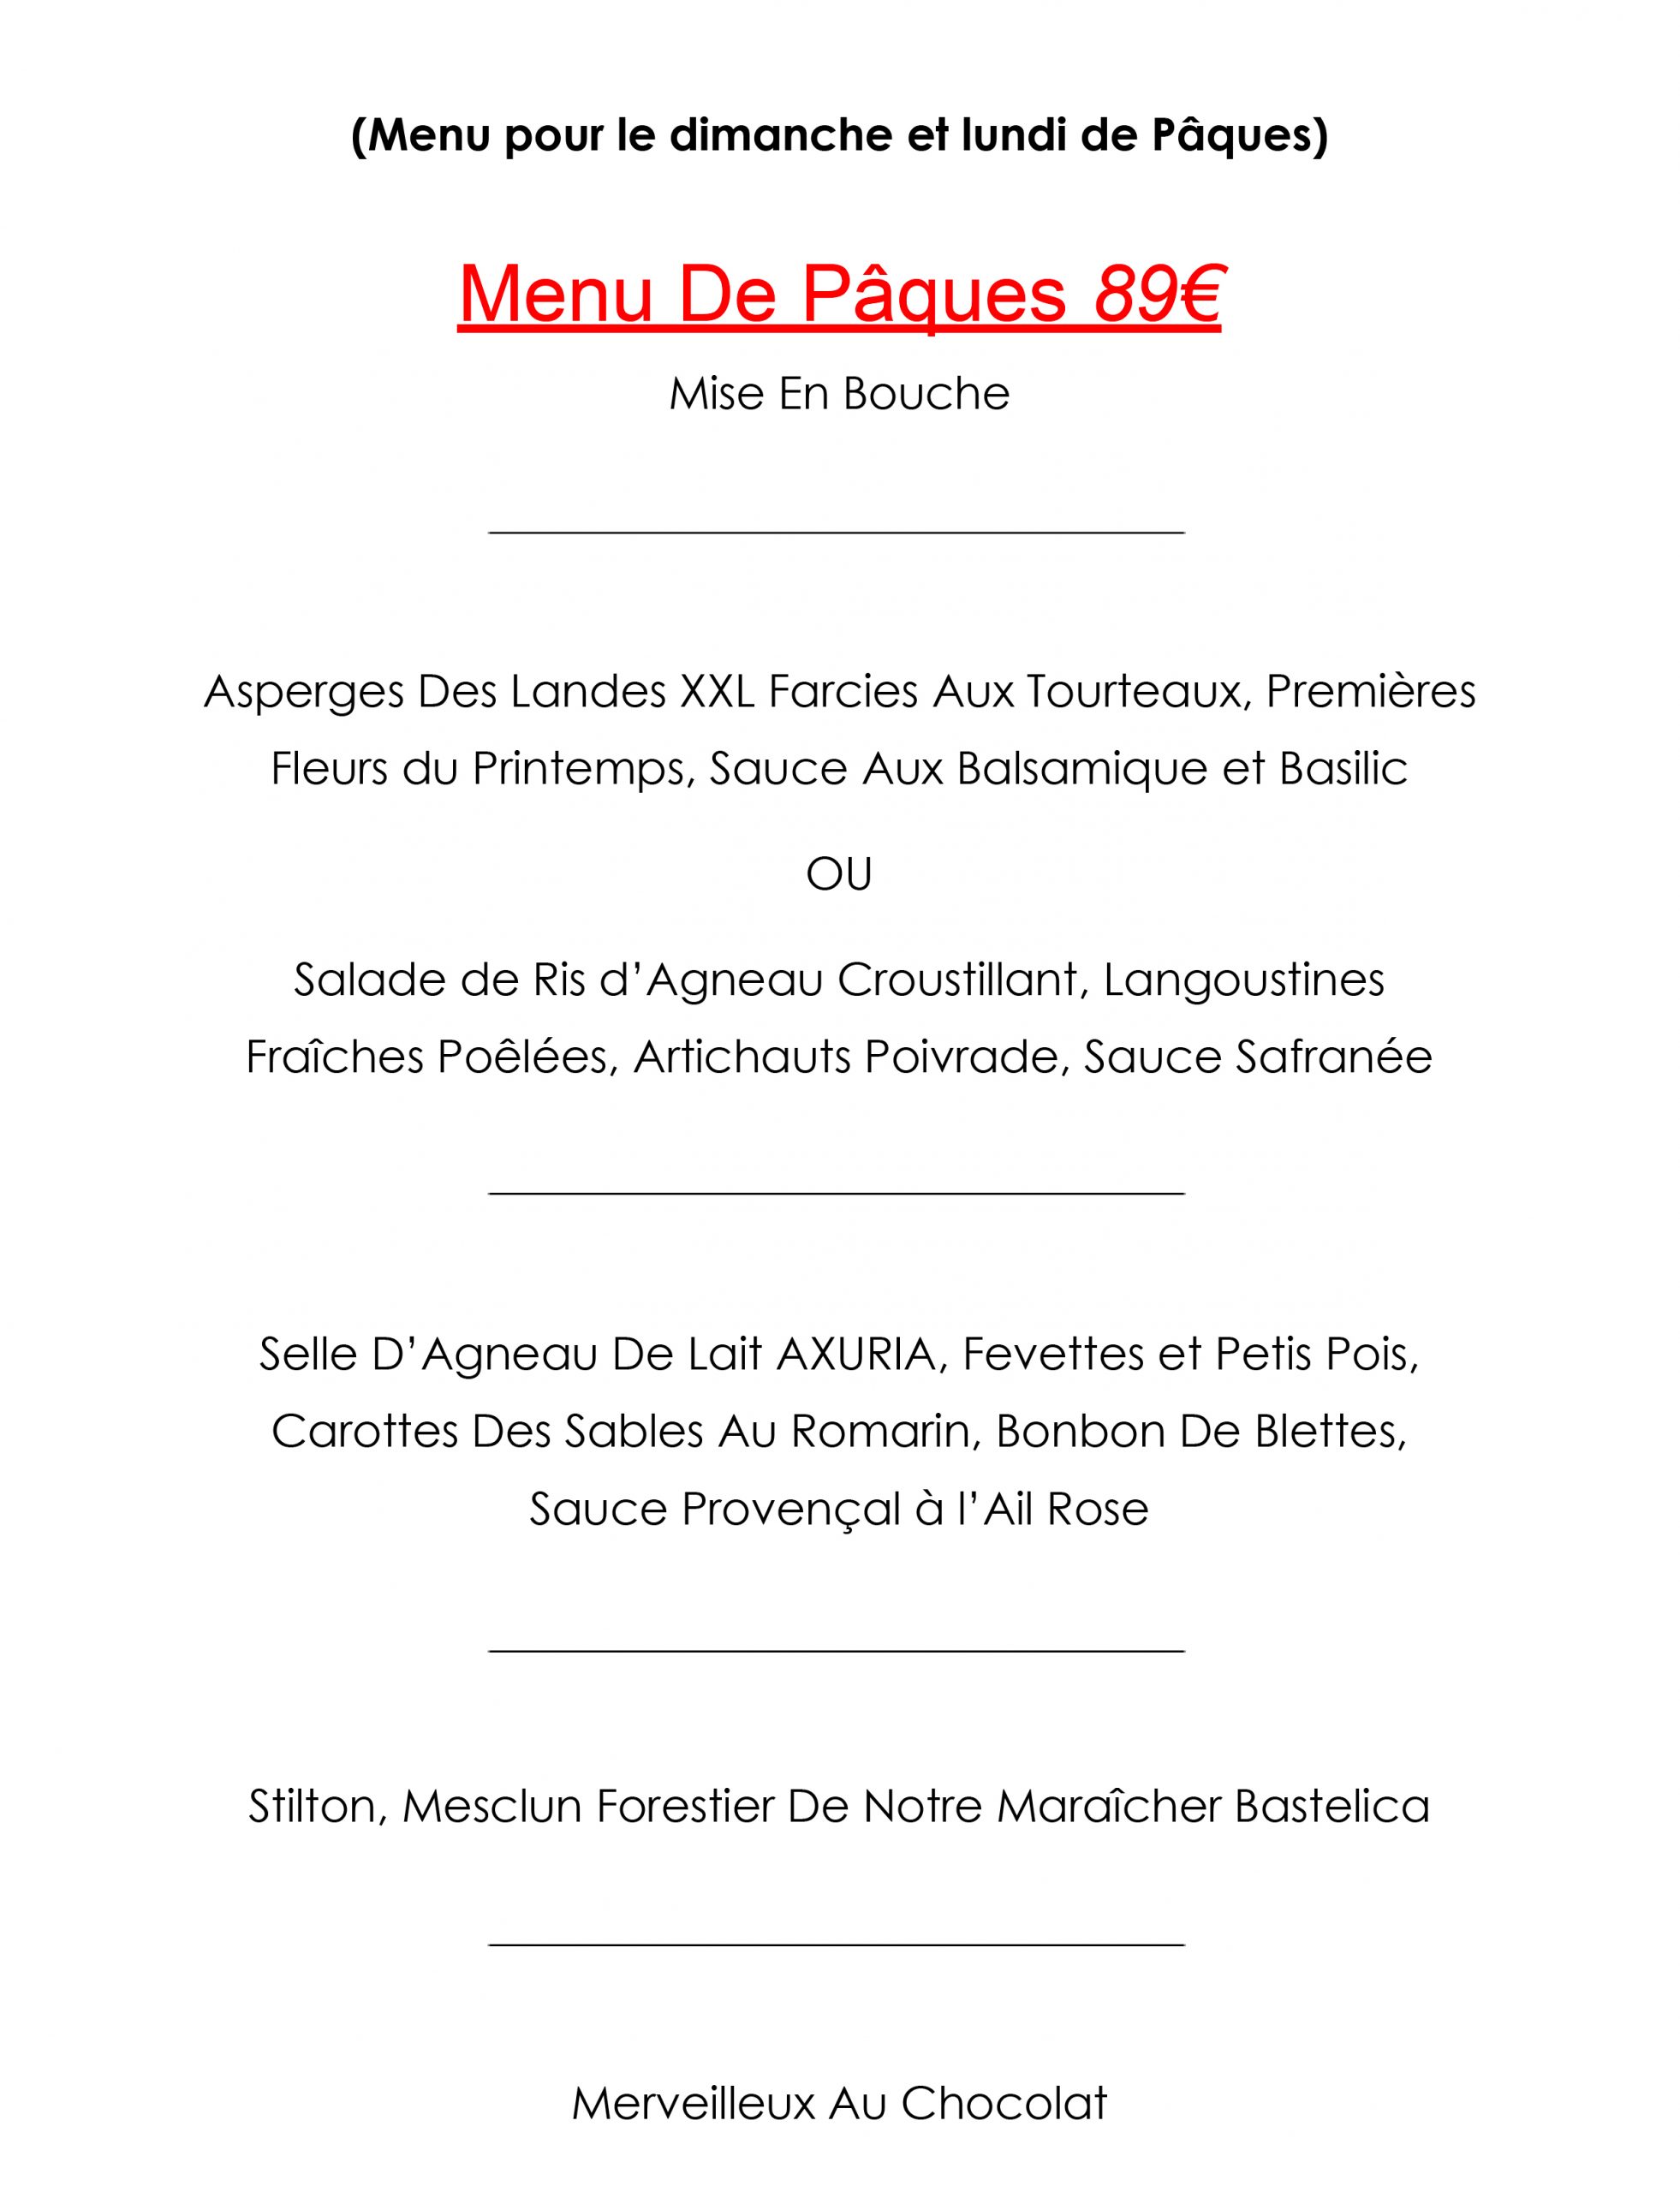 menu-paque-89